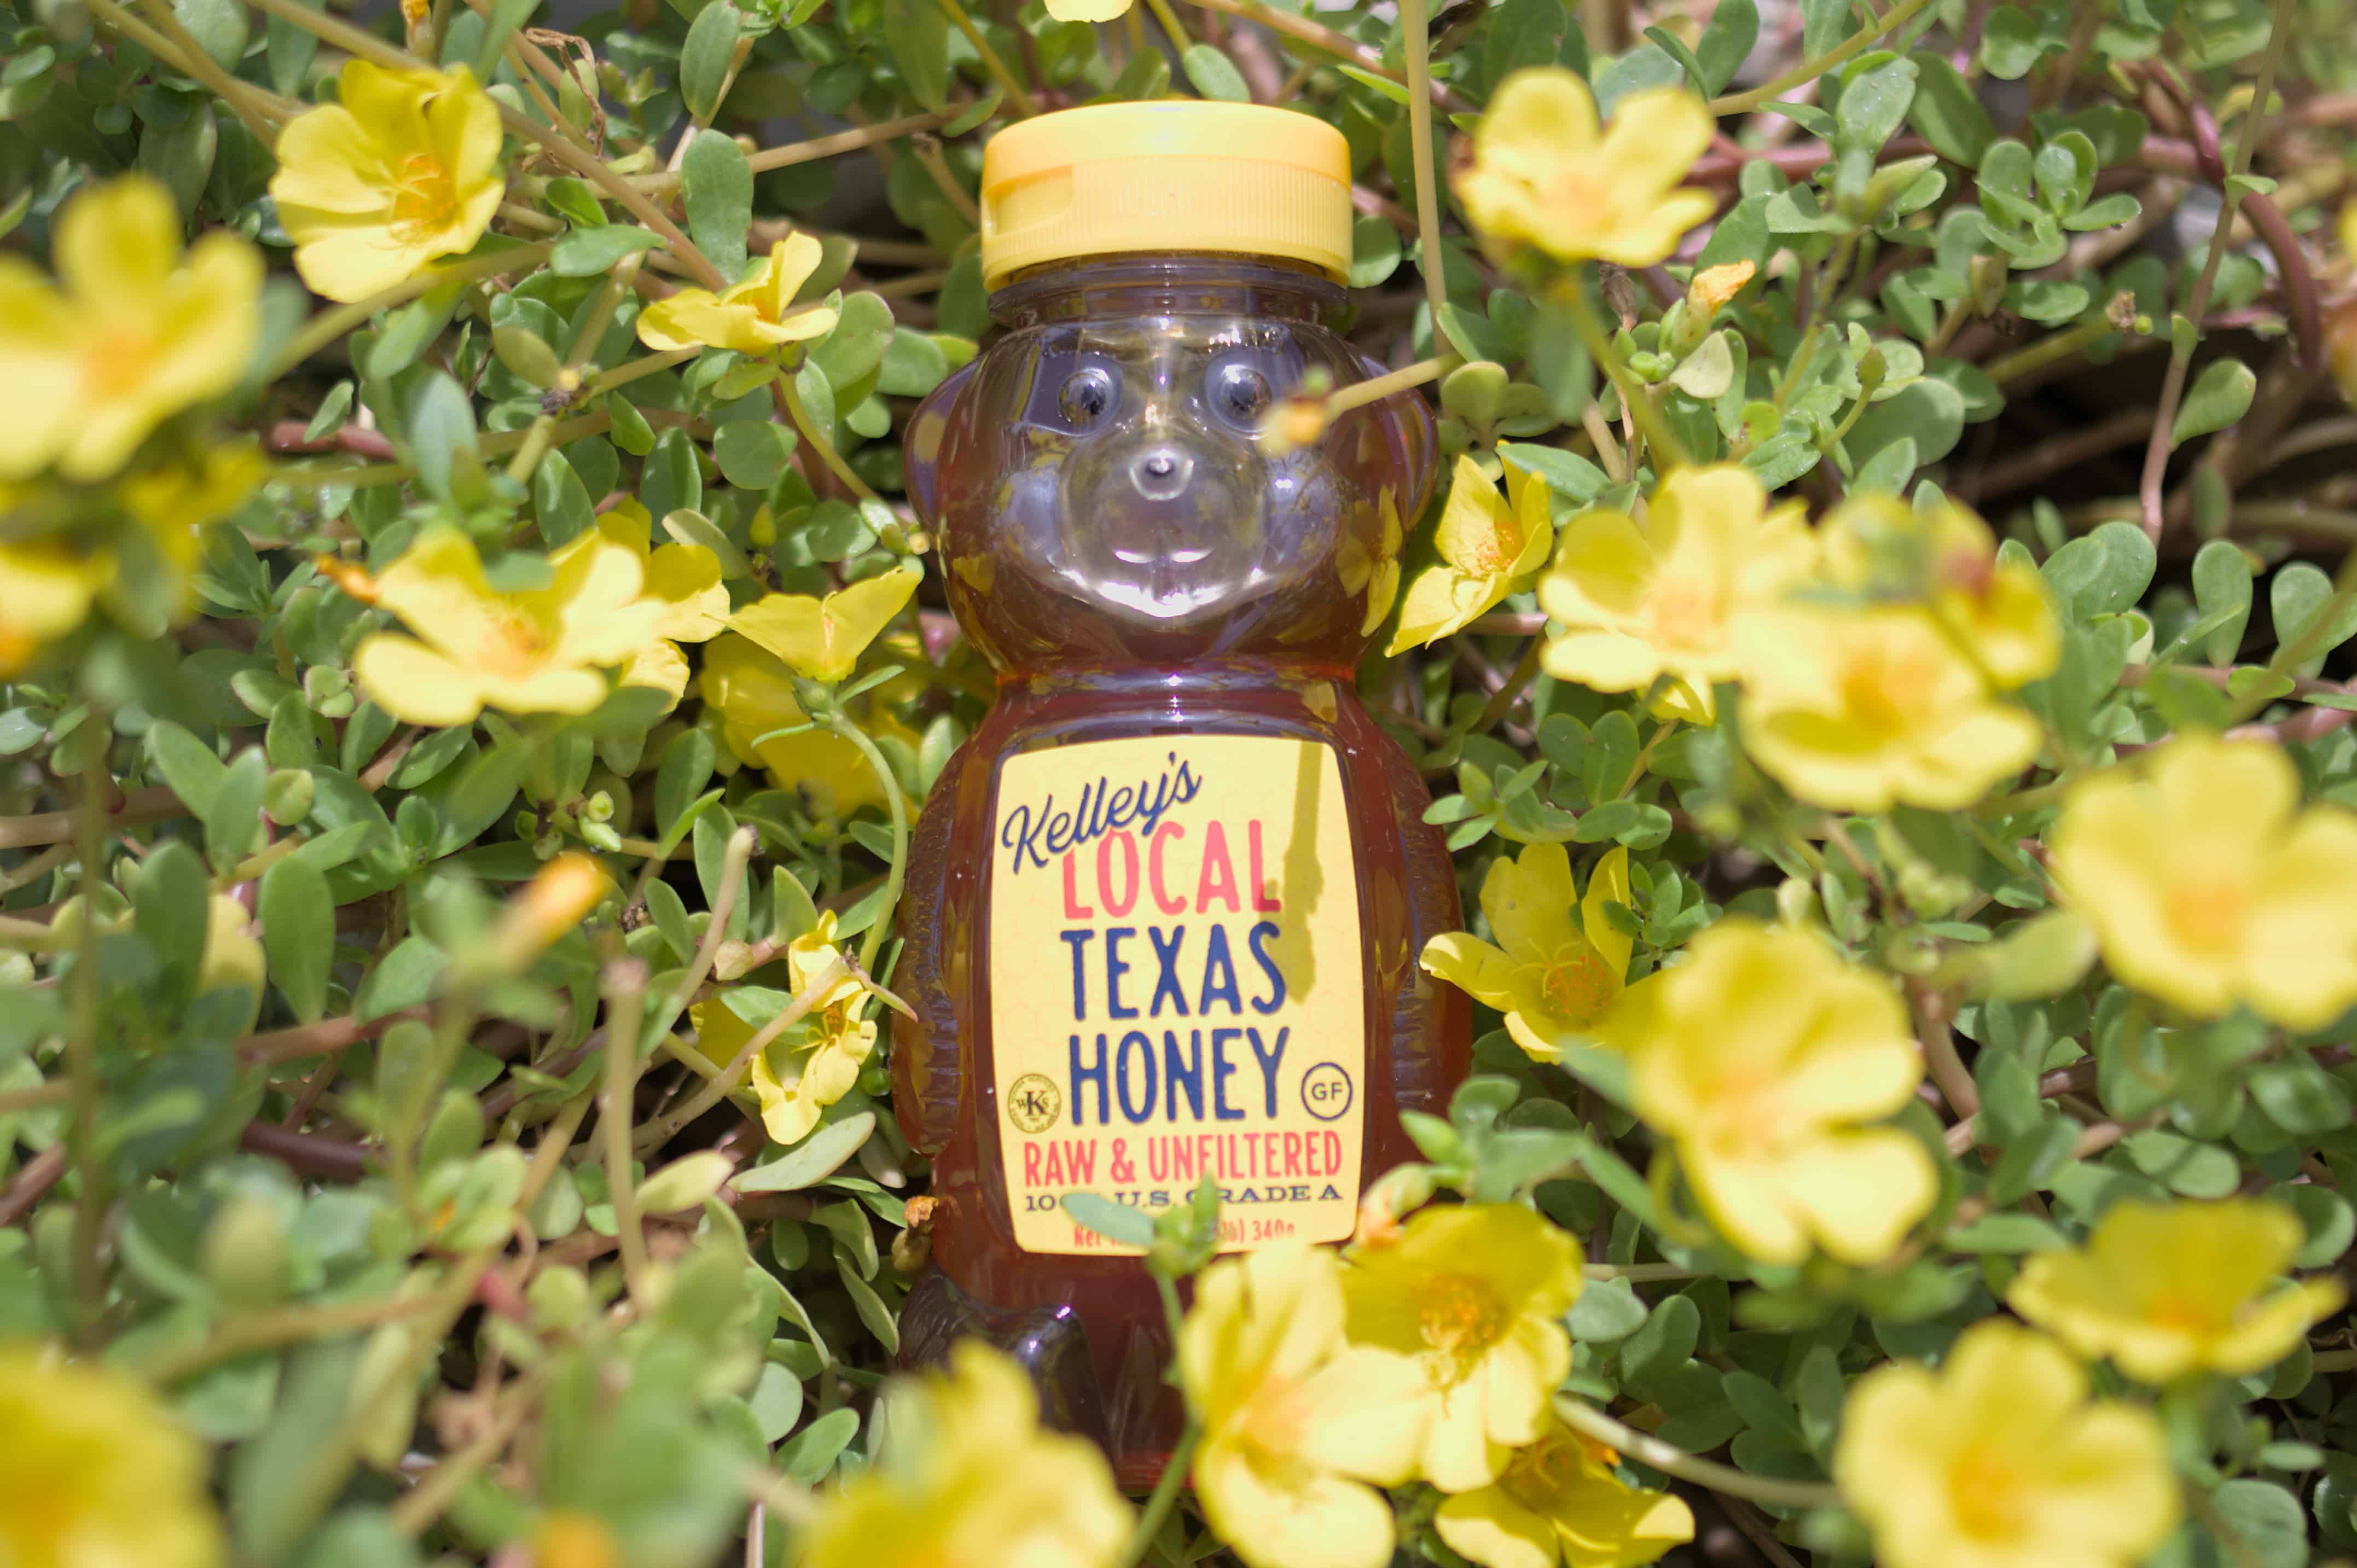 Kelley's Local Raw Texas Honey